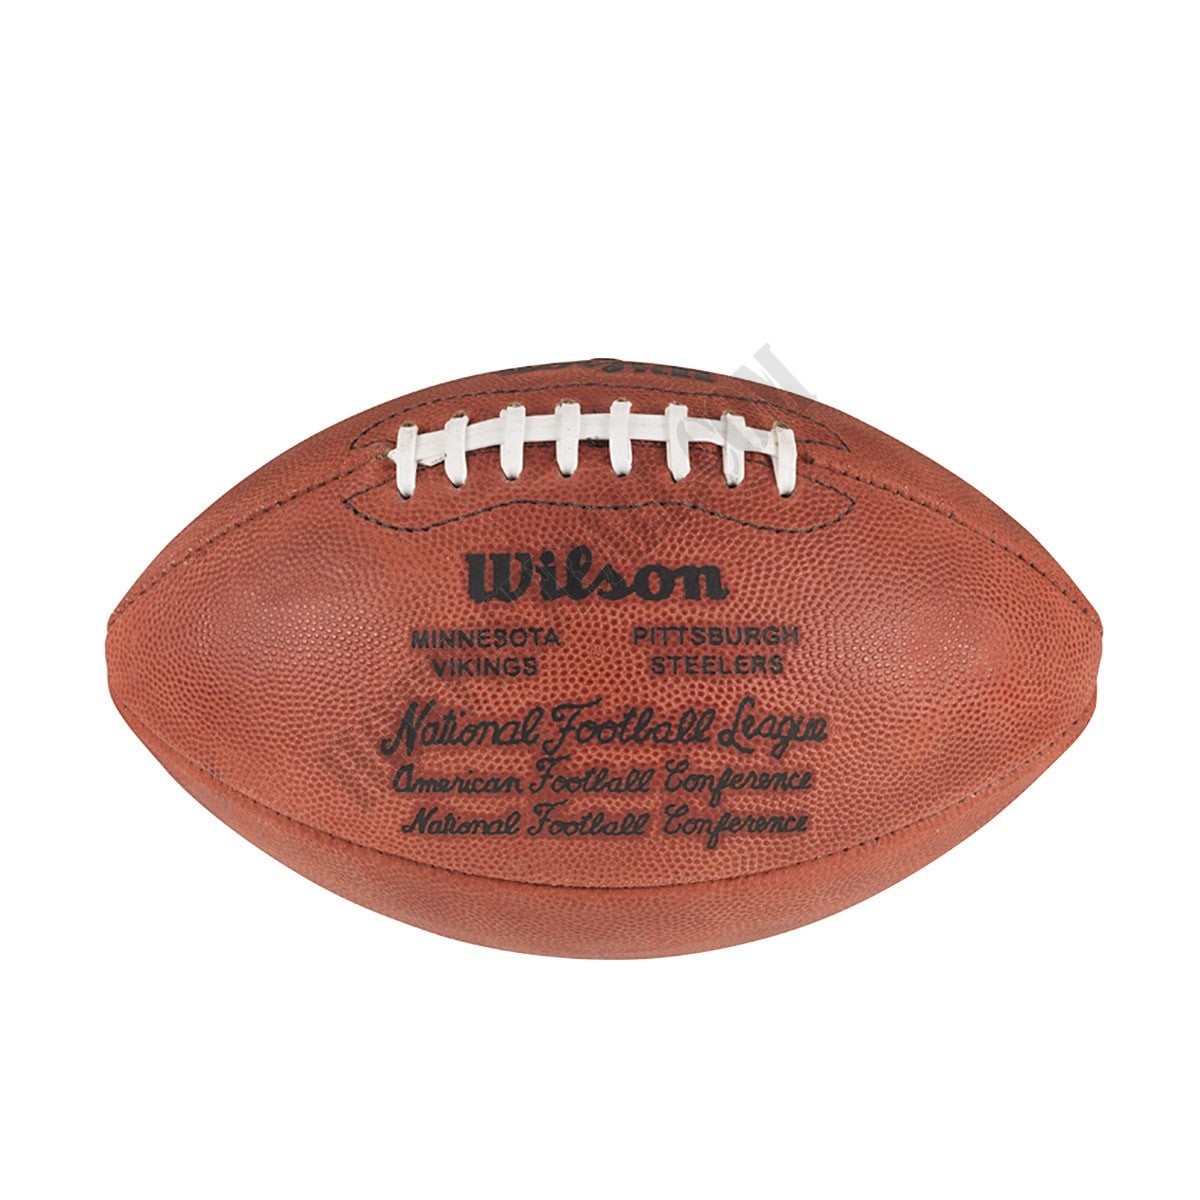 Super Bowl IX Game Football - Pittsburgh Steelers ● Wilson Promotions - Super Bowl IX Game Football - Pittsburgh Steelers ● Wilson Promotions